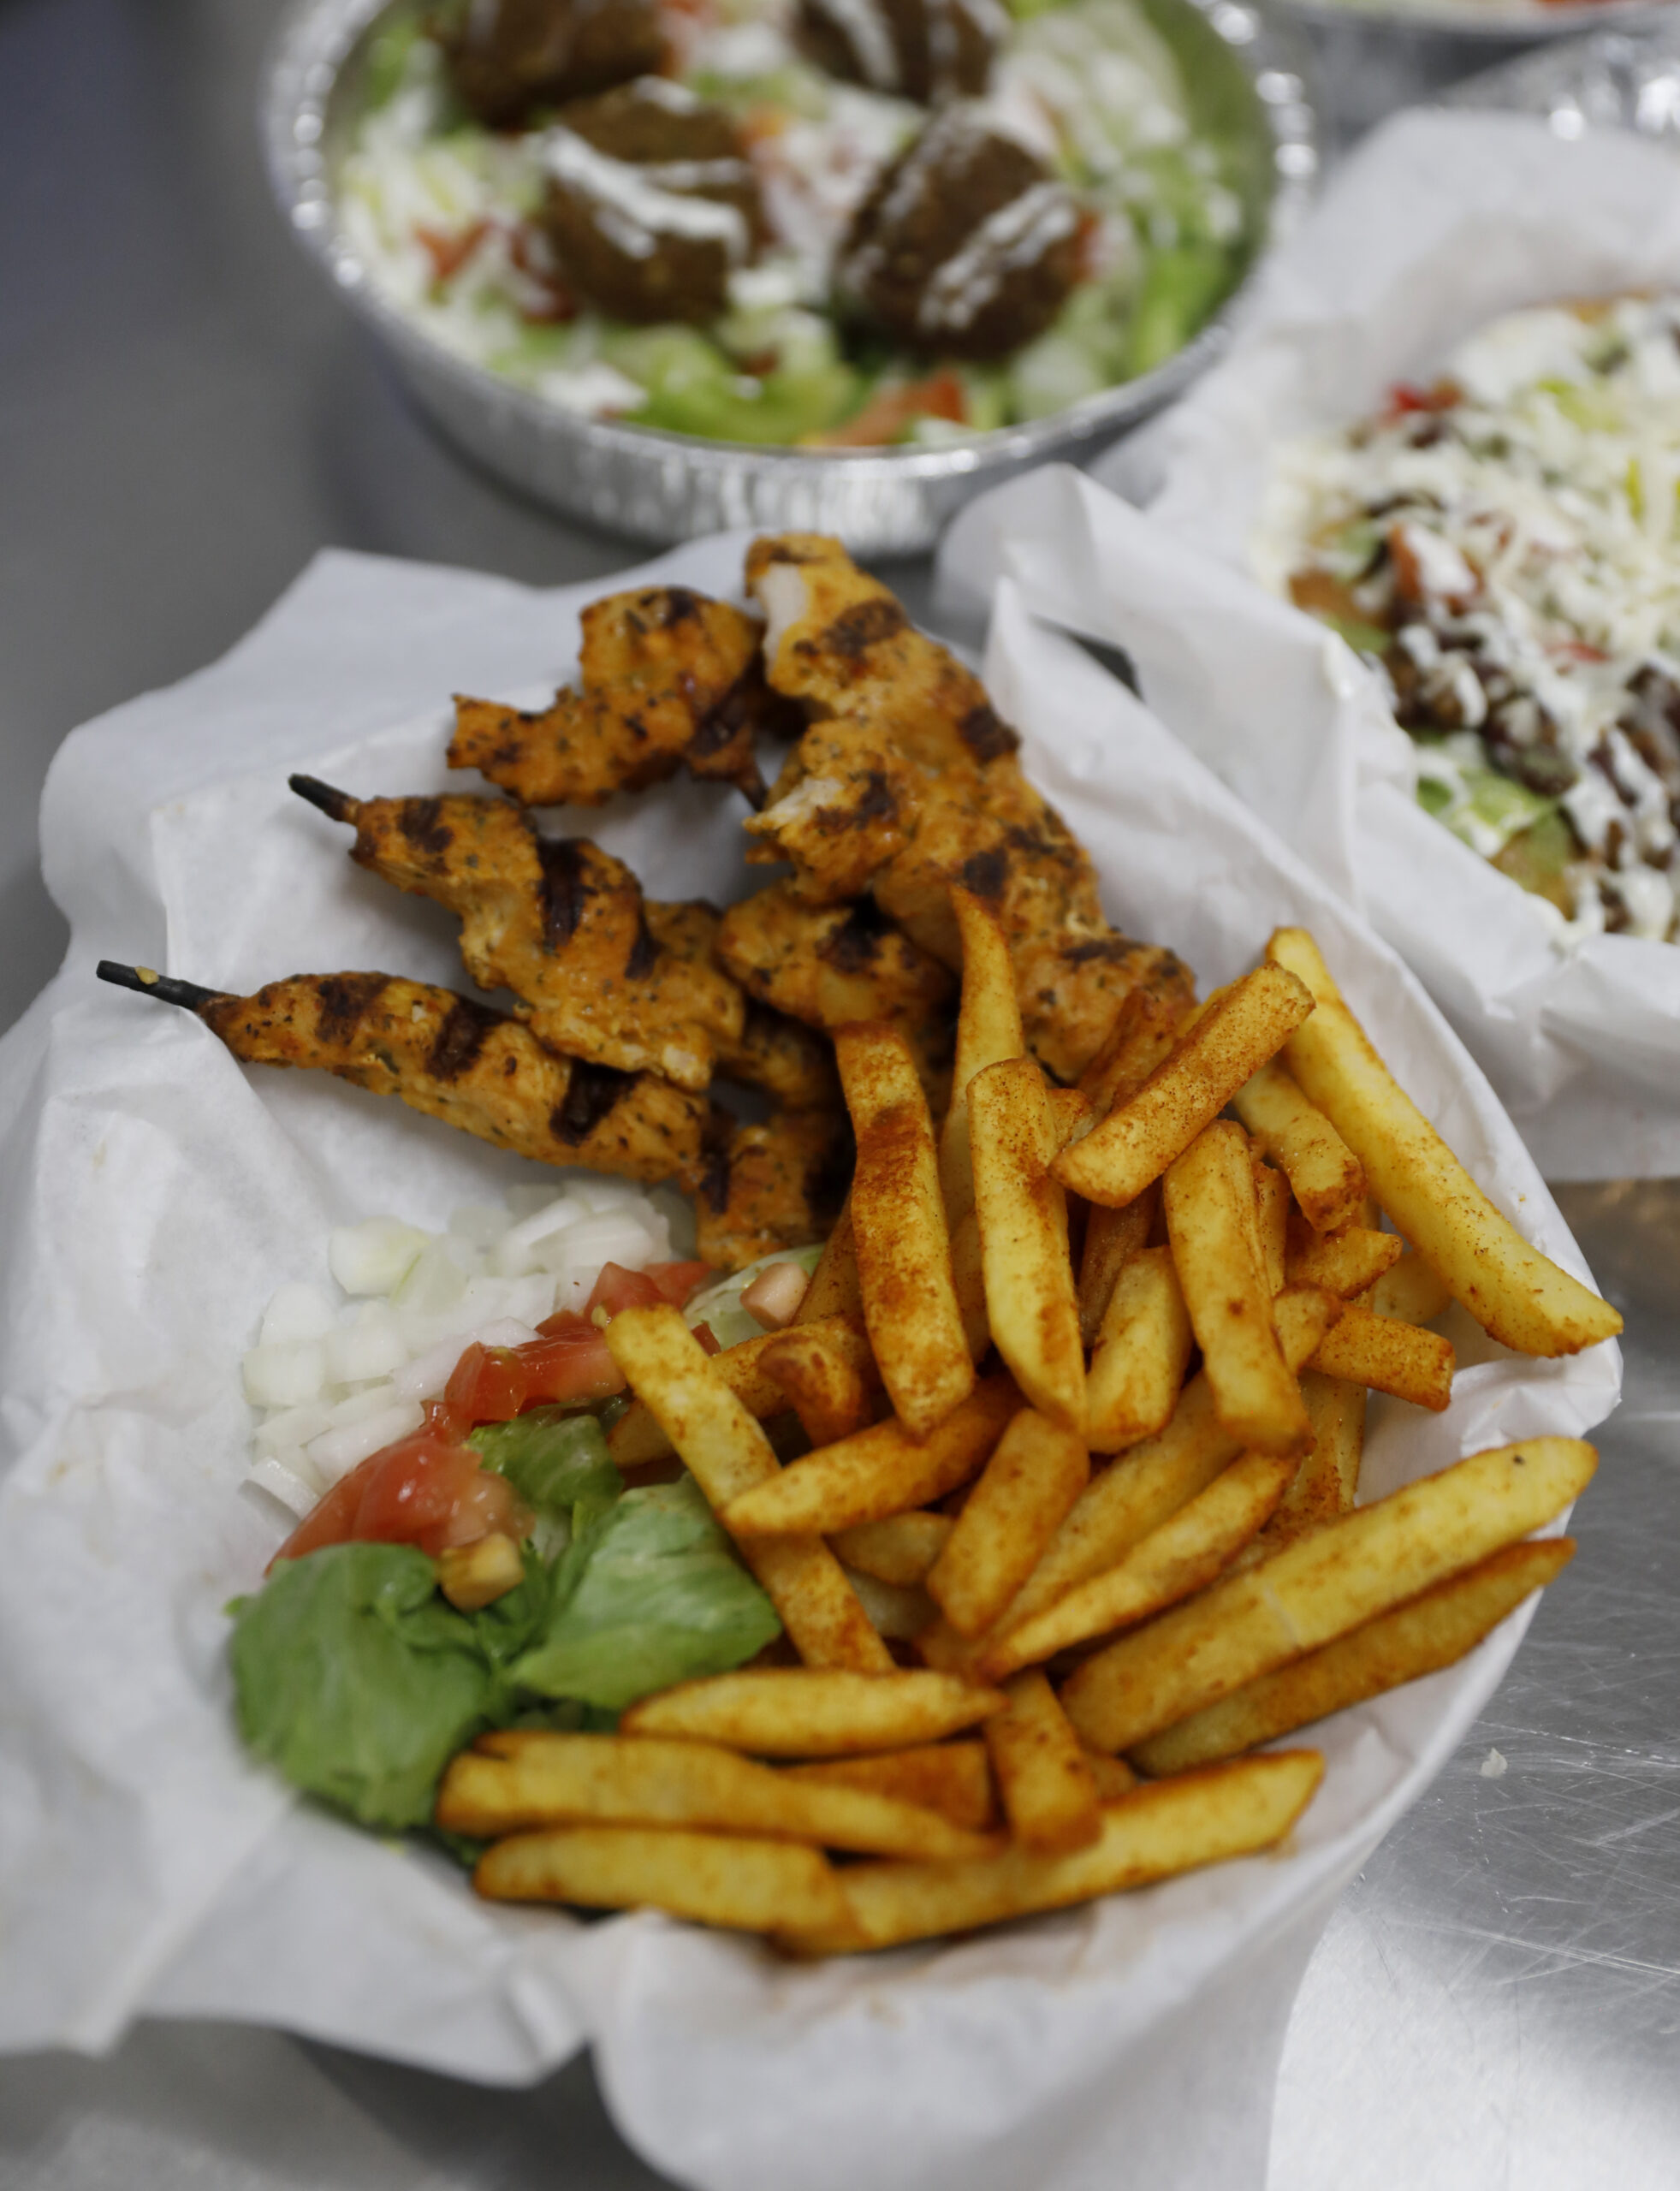 The chicken kebab with seasoned fries at ZamZam in Santa Rosa, Calif. on Monday, July 25, 2022. (Beth Schlanker/The Press Democrat)